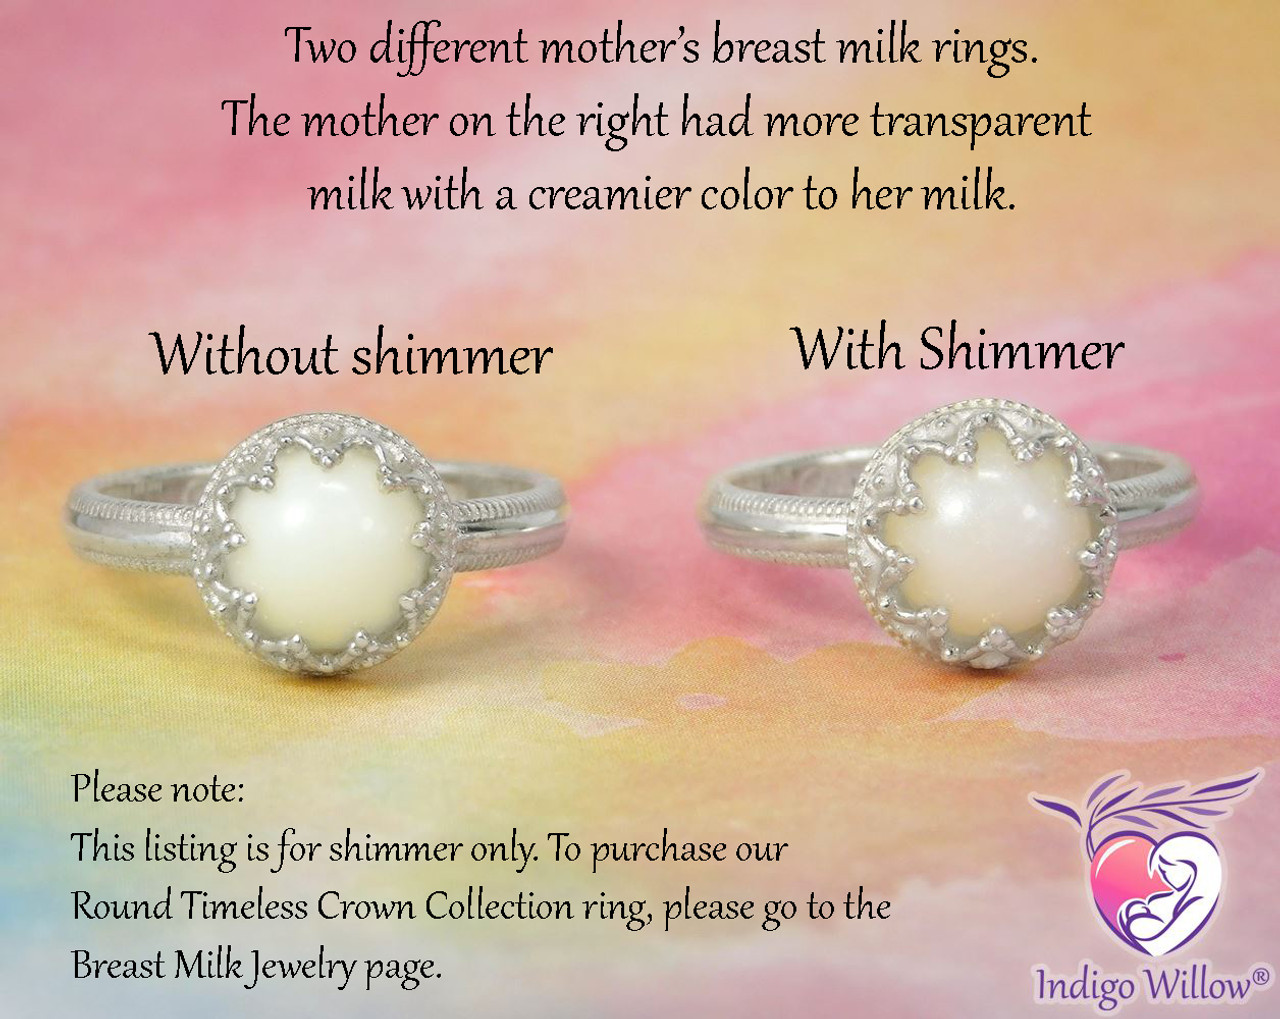 The Making of Breast milk Jewelry 